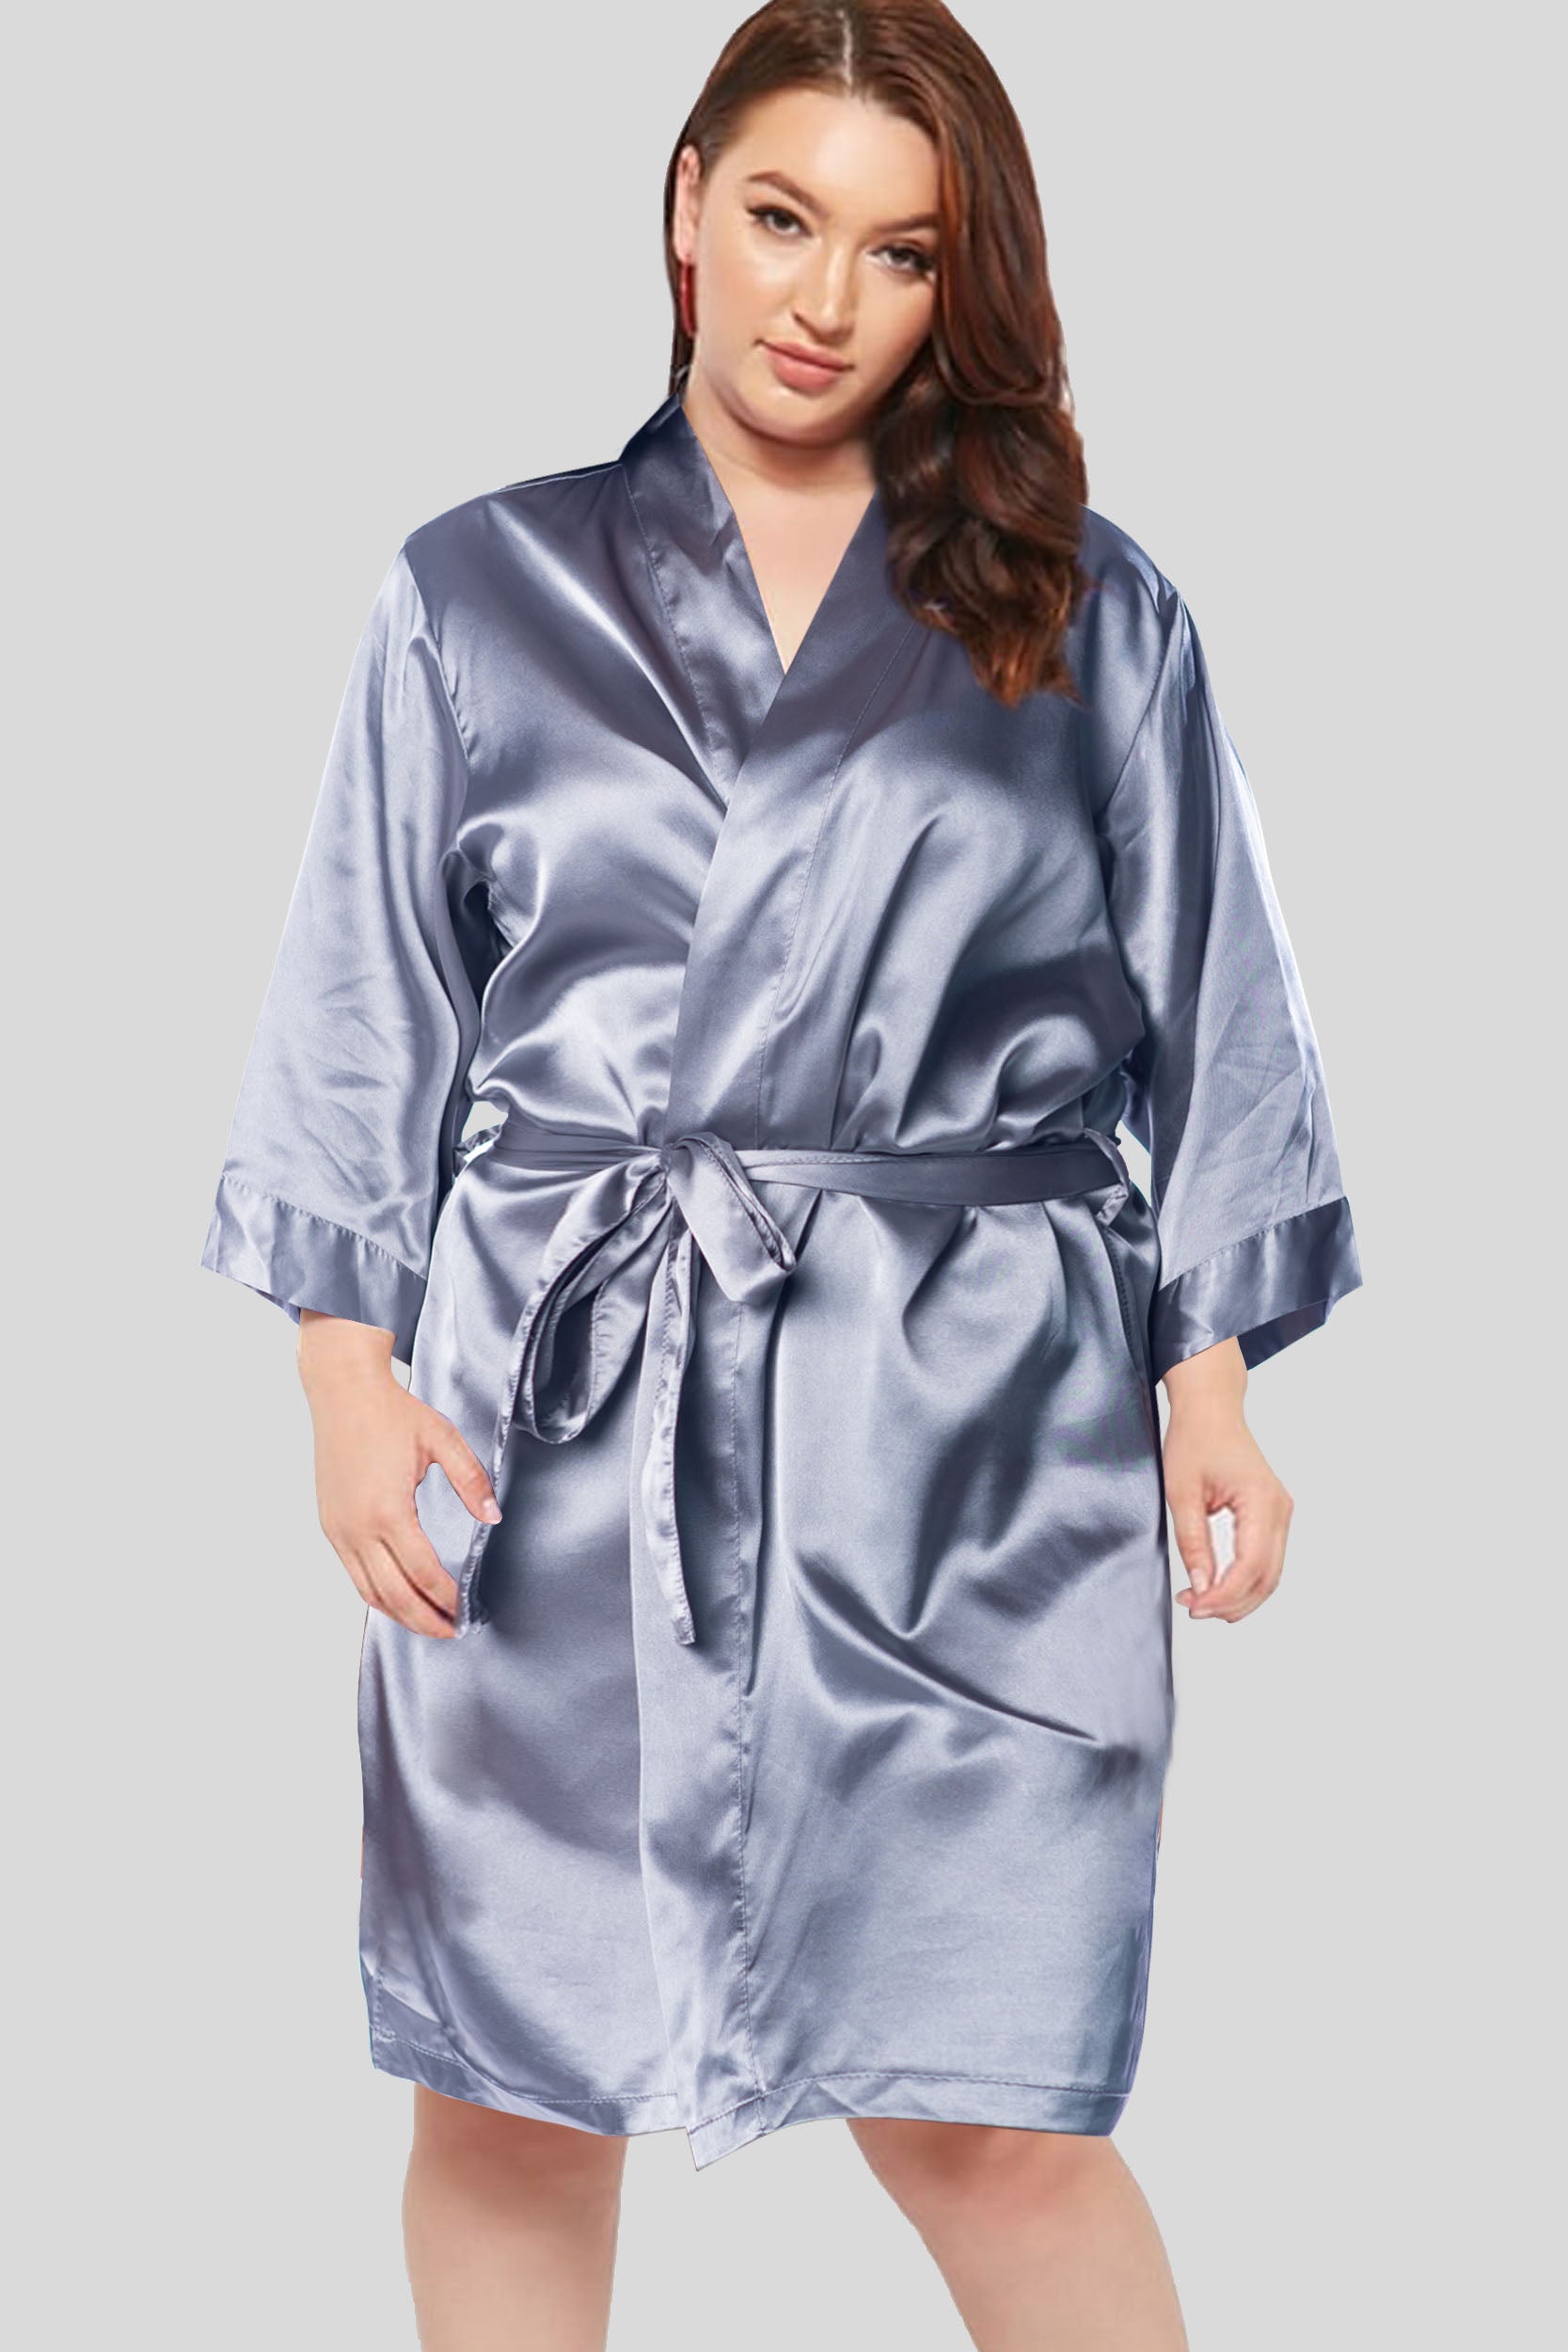 Charcoal Satin Kimono Bridal Robe XL - Bridesmaid Robe - Affordable Robe - Wedding Gift - Bridal Gift - Bridesmaid Gift - Satin Robe - Kimono Robe – PrettyRobes